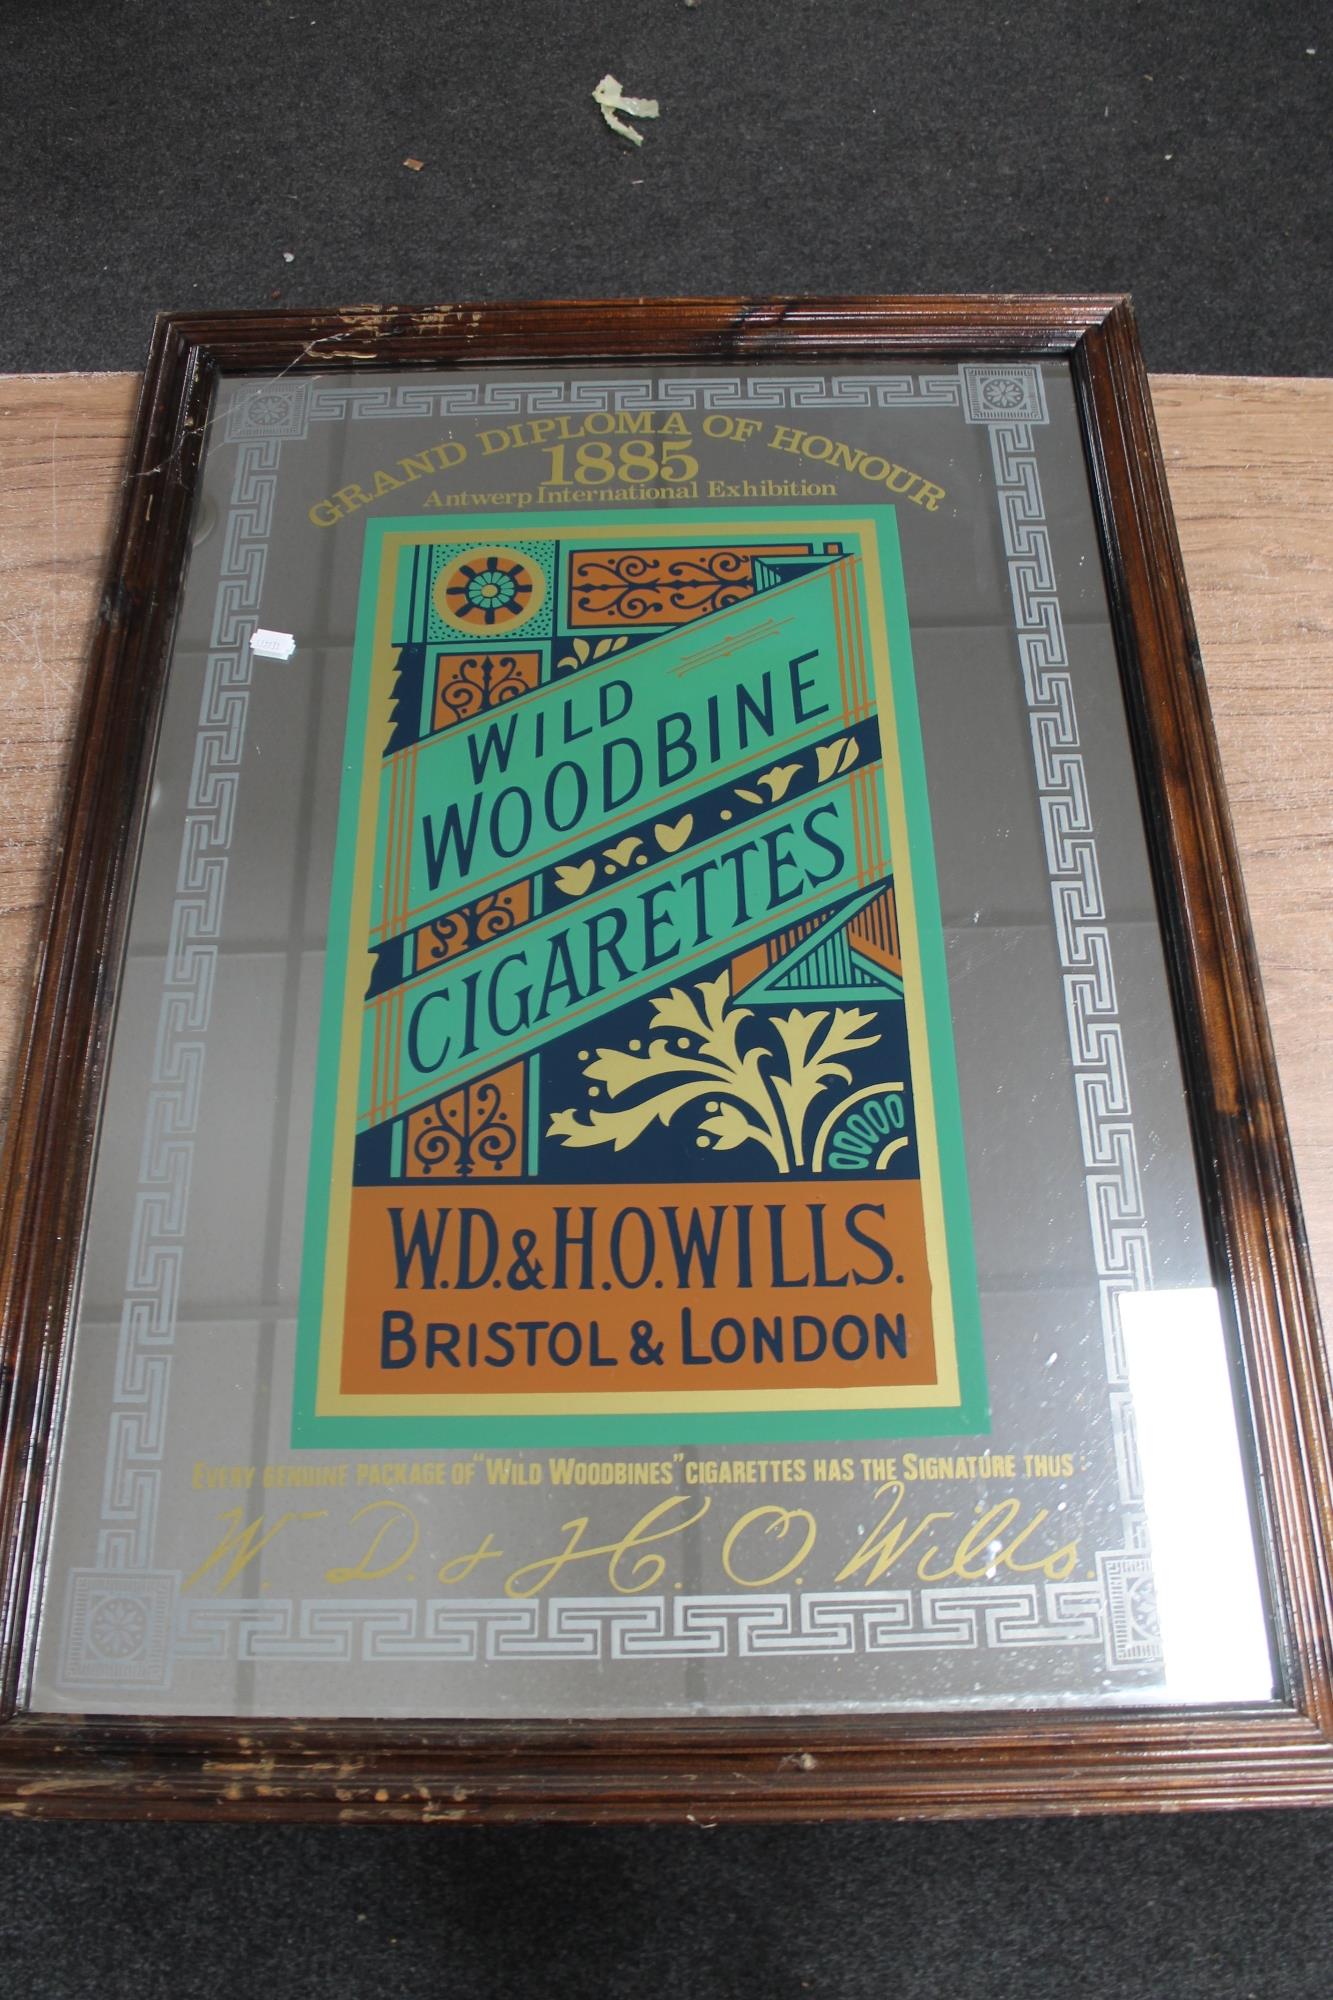 An advertising mirror - wild woodbine cigarettes